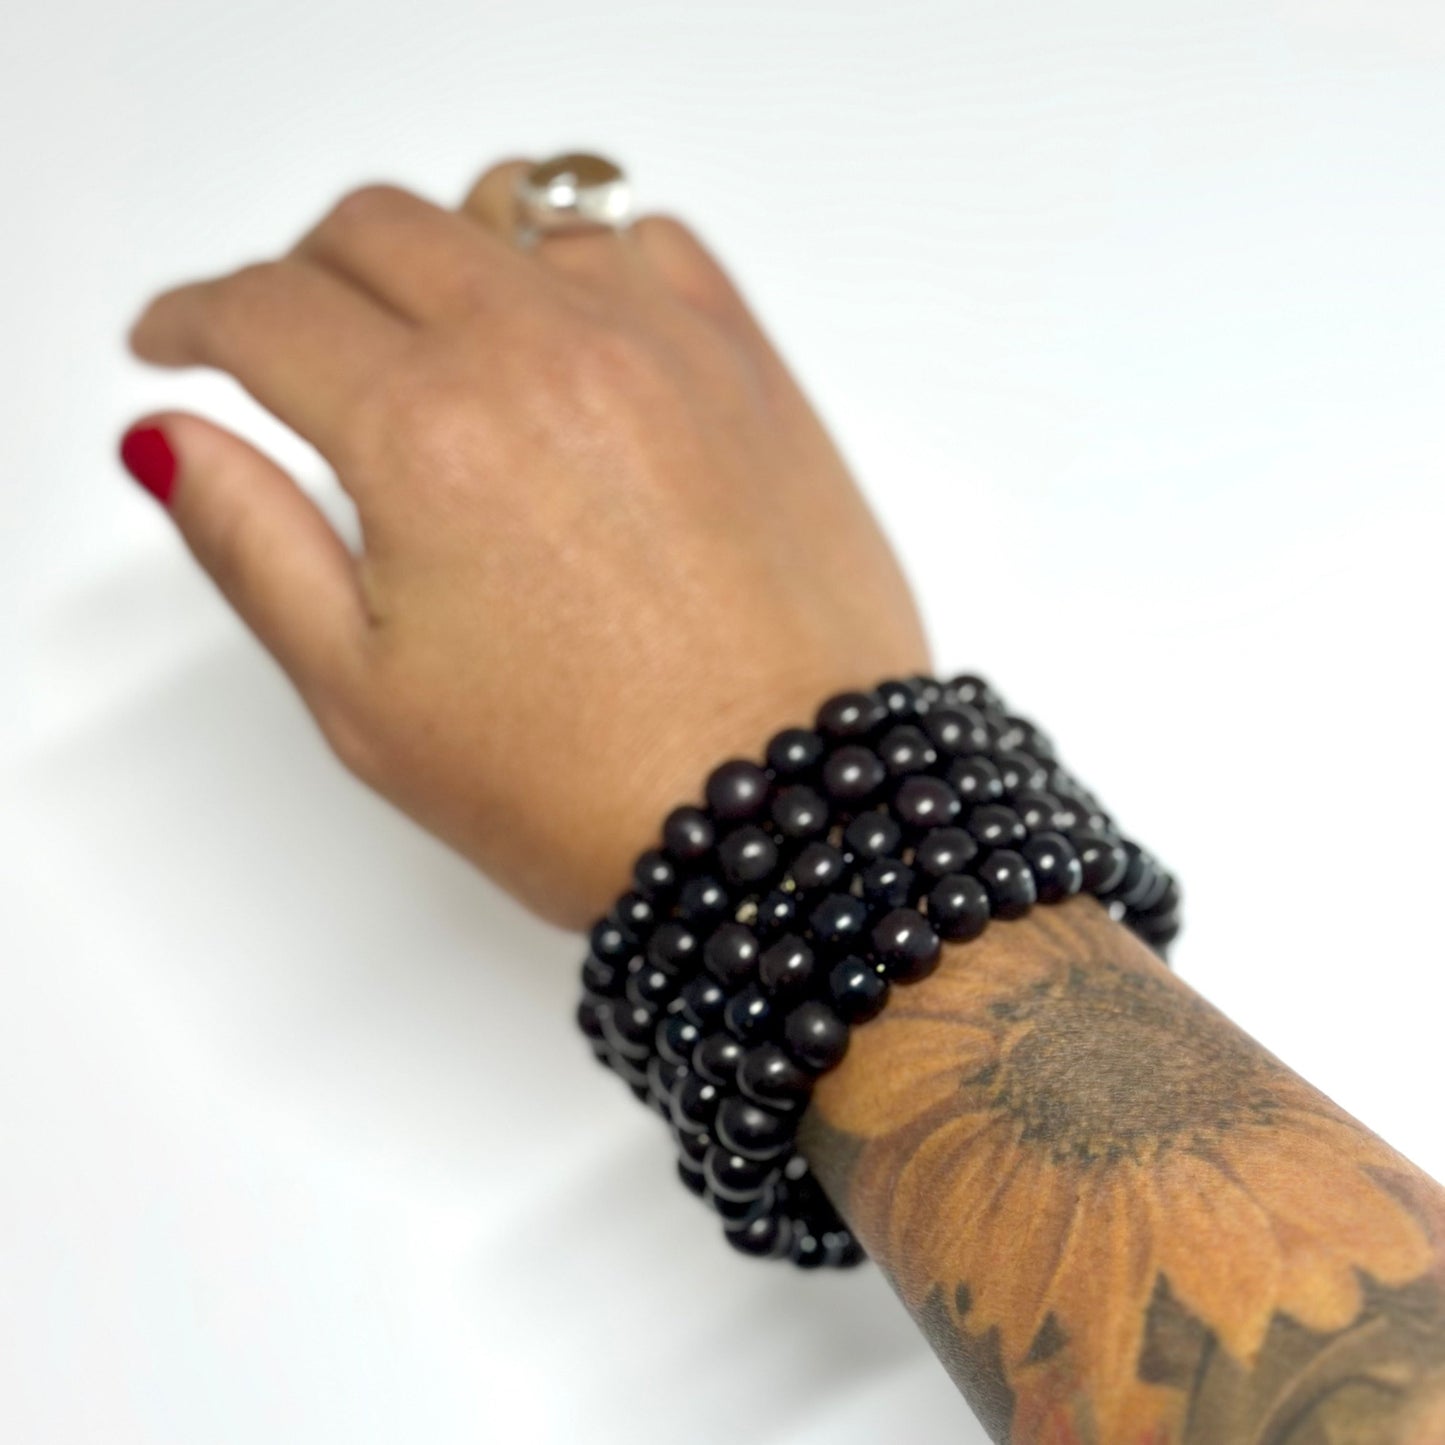 Stylish black Acai Multi Strands Bracelet elegantly adorning a wrist, showcasing the perfect blend of sophistication and eco-friendly fashion. Handmade by artist Fernanda Sullivan in Charleston, SC."